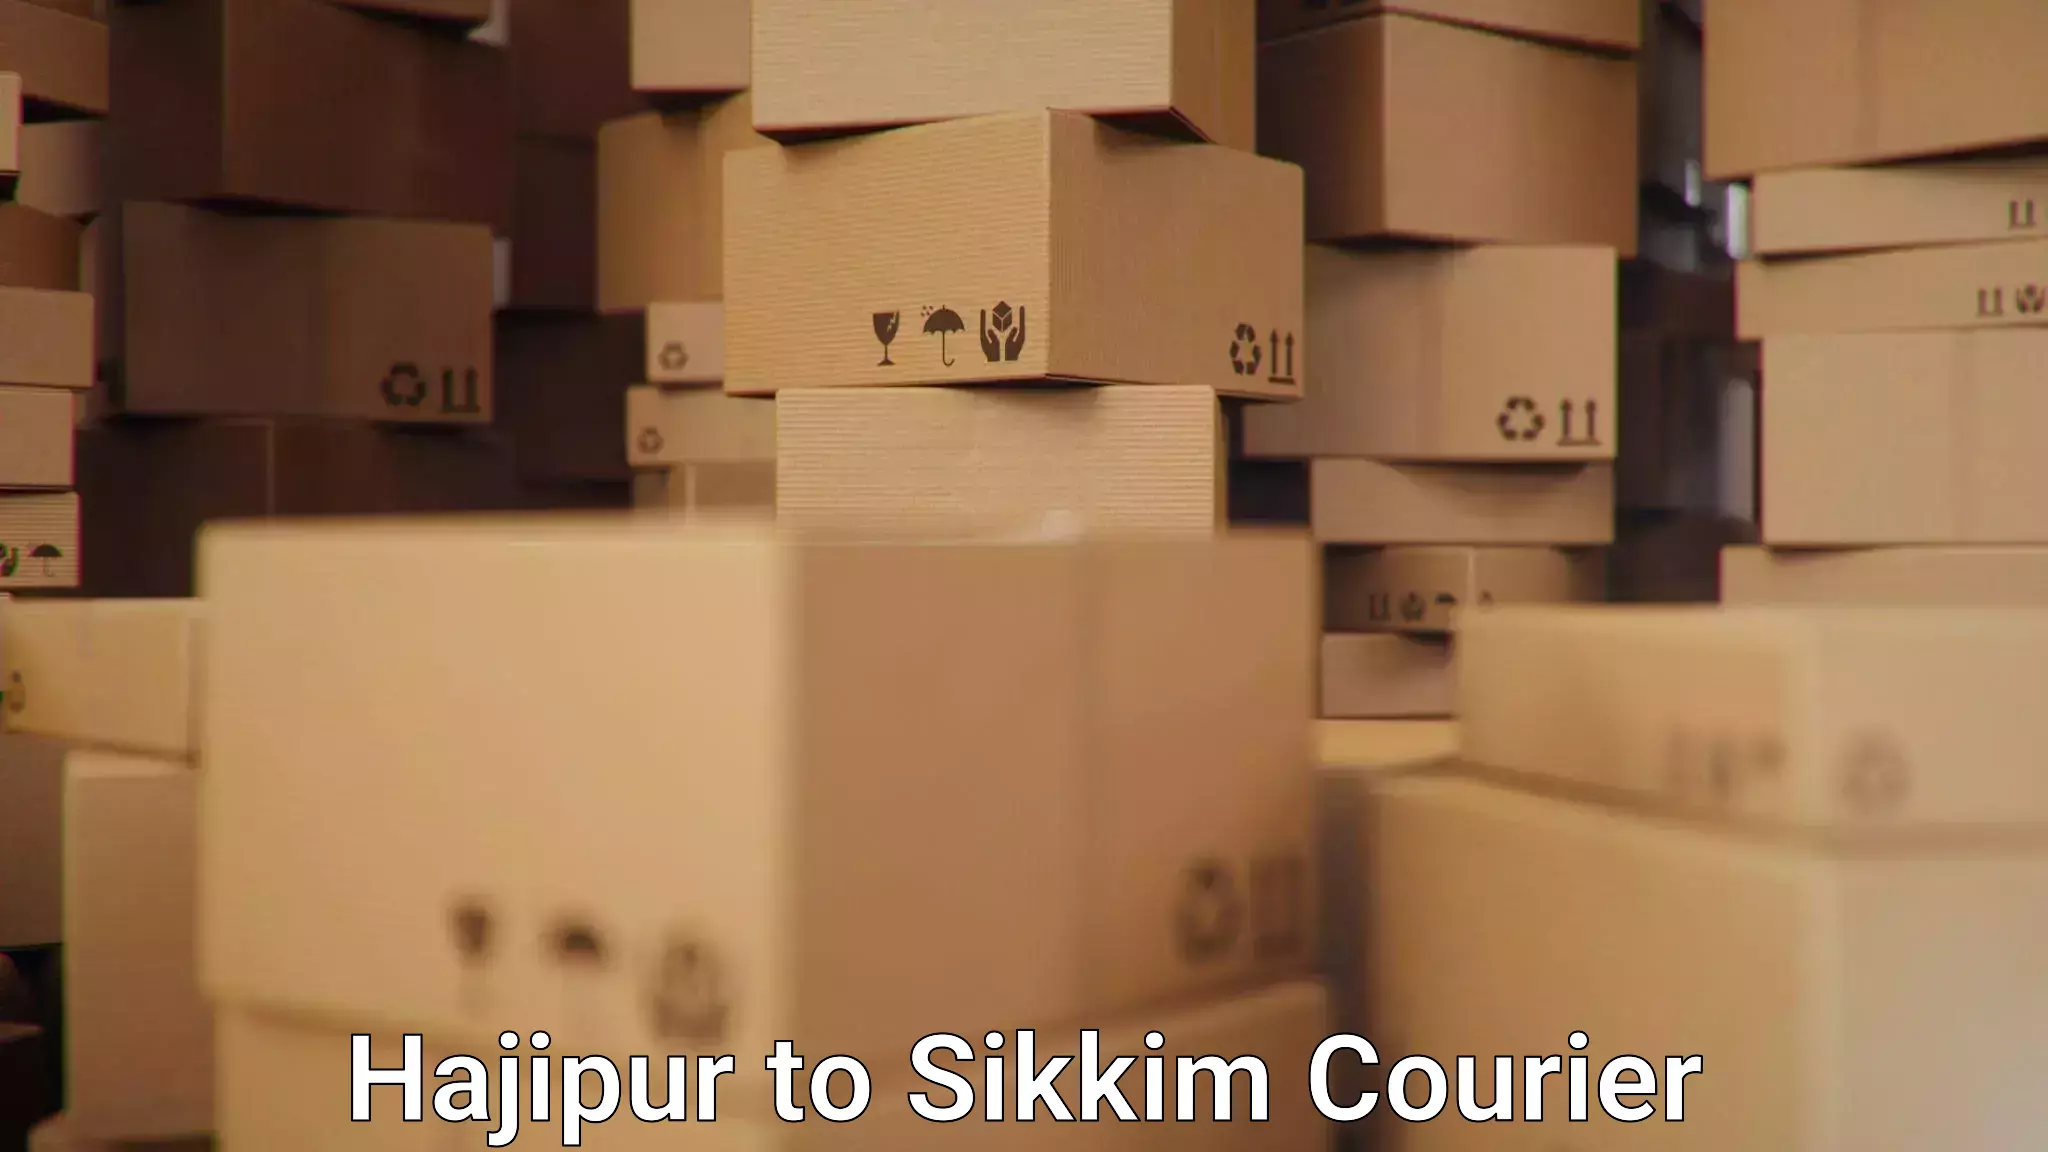 Courier service comparison Hajipur to North Sikkim